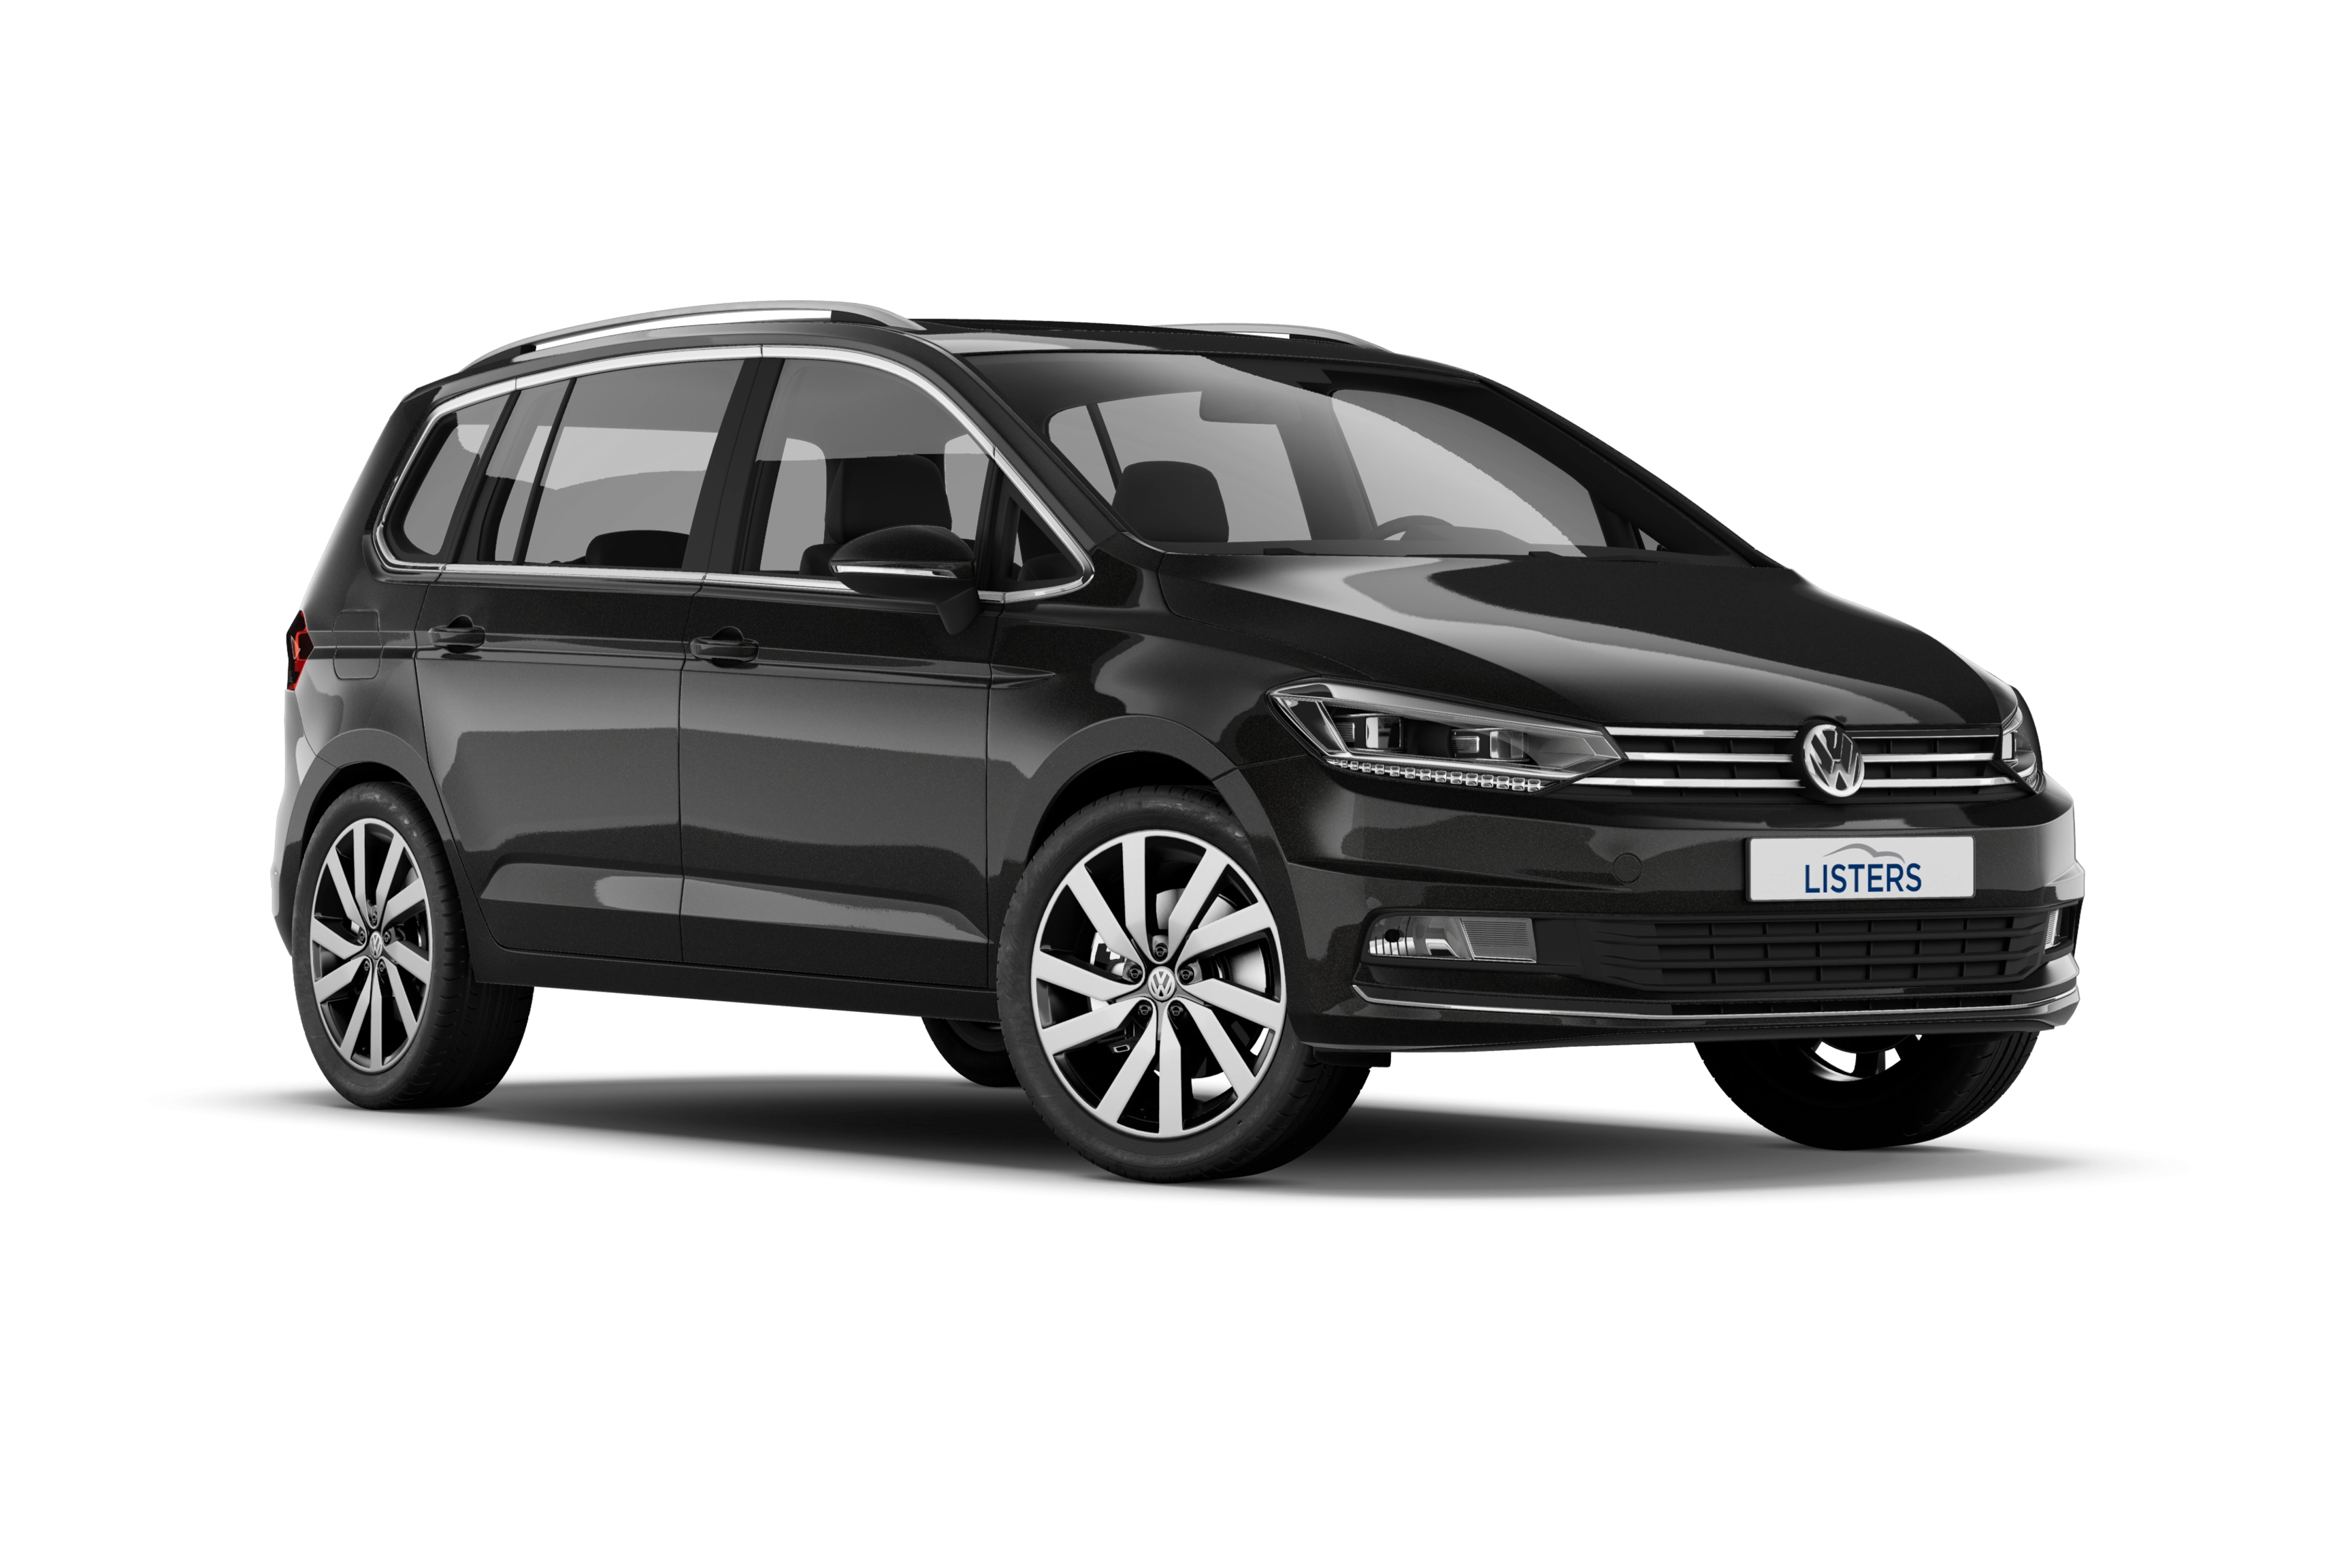 Volkswagen Touran Motability Offers